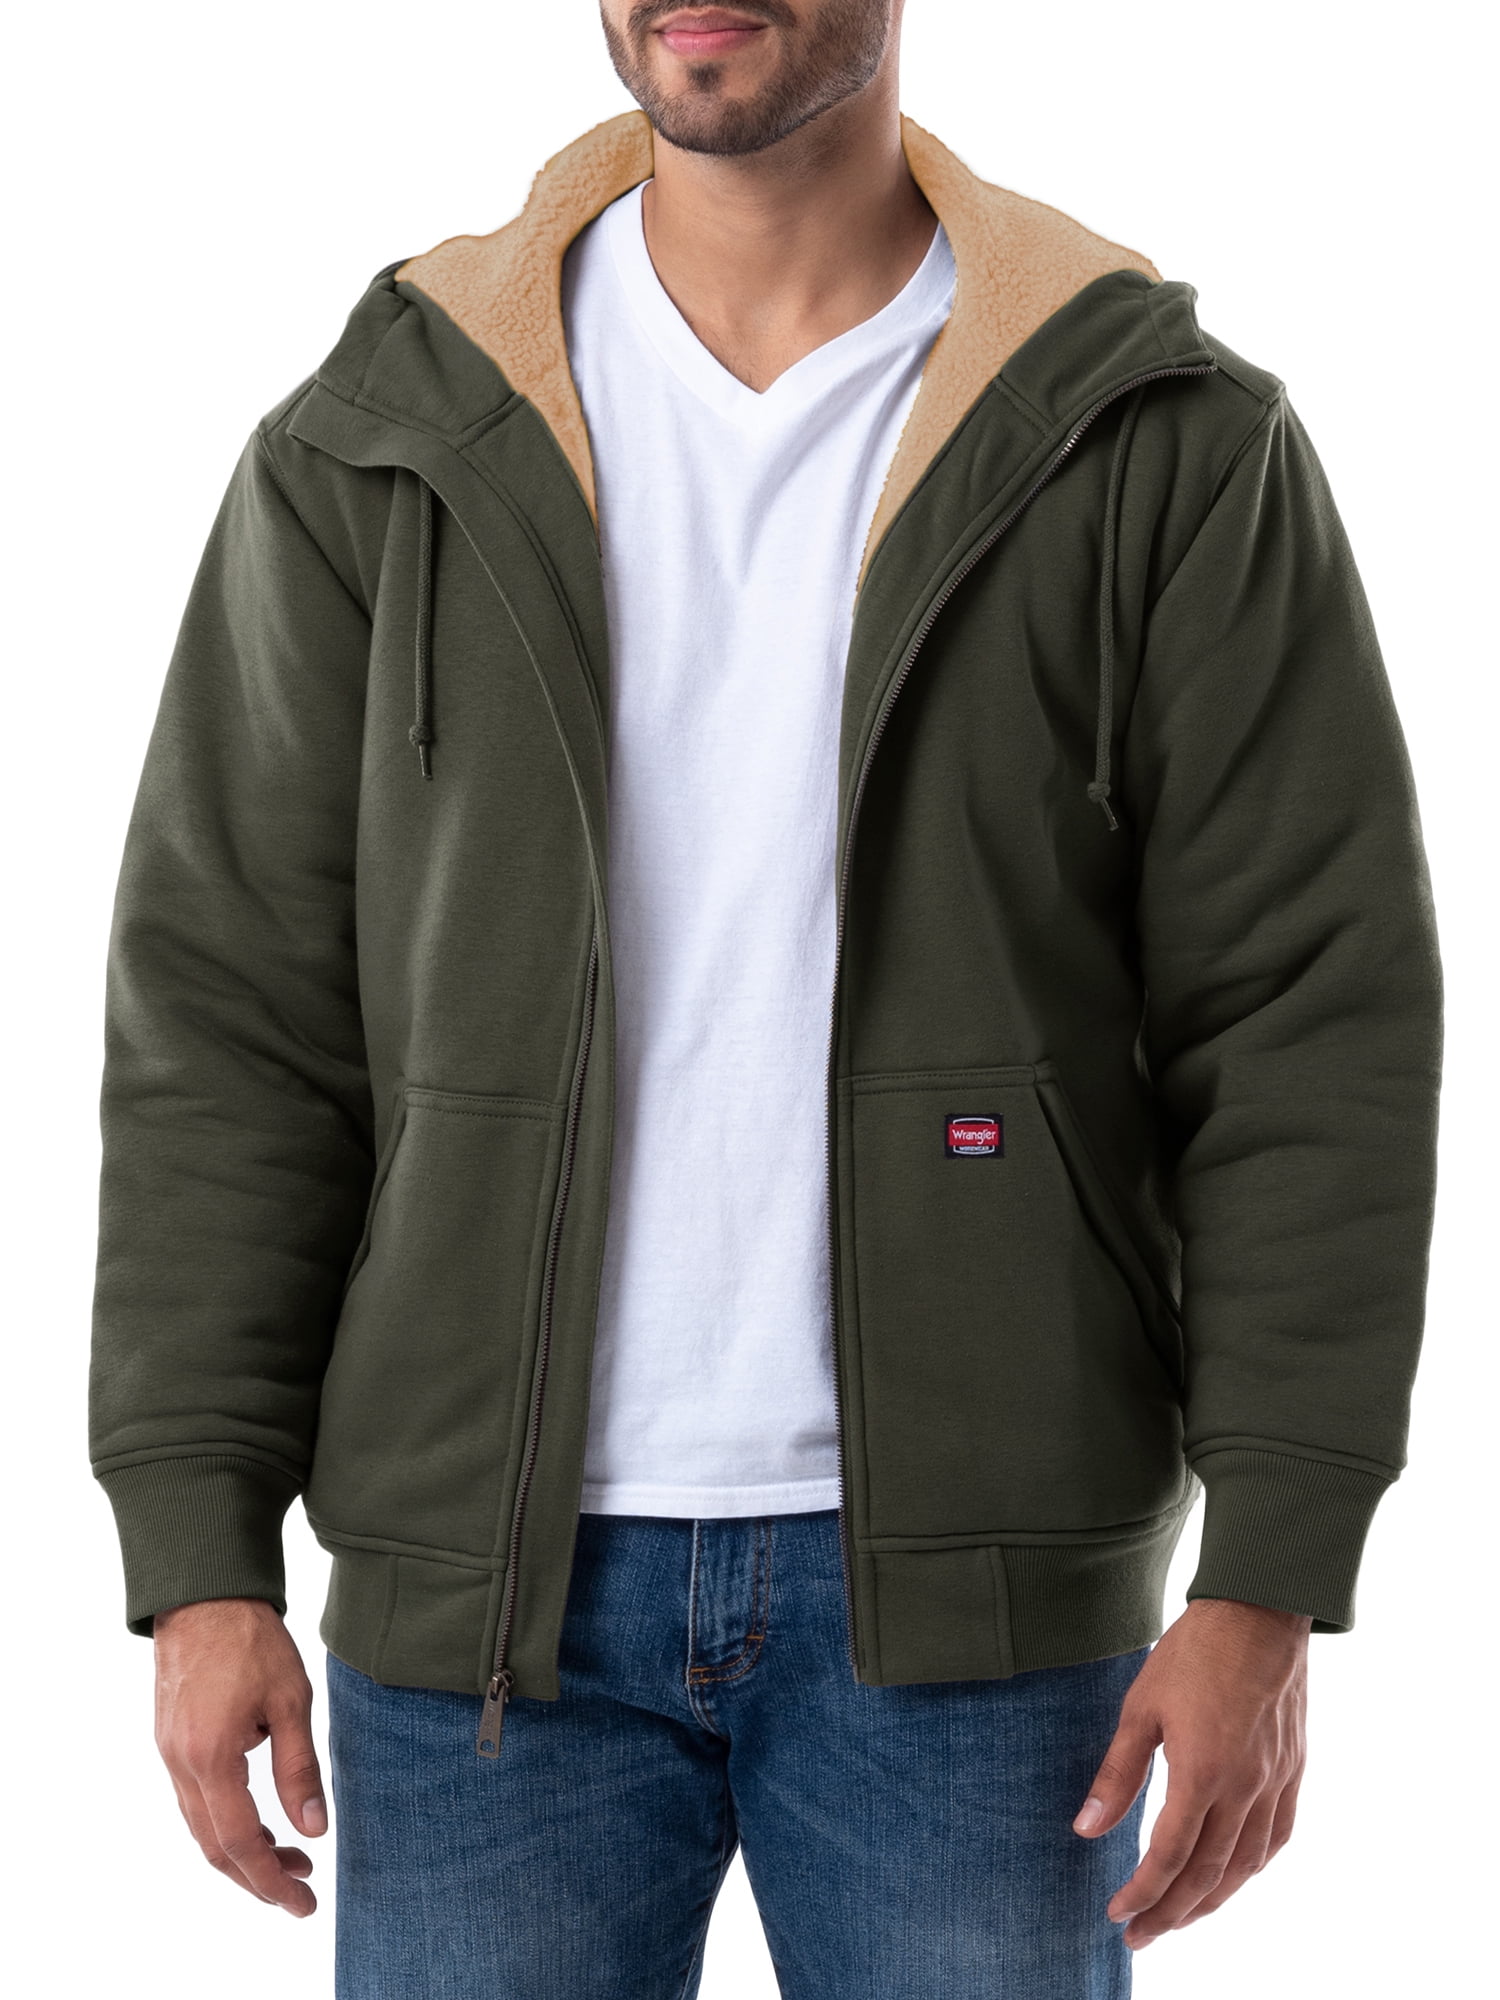 Arriba 30+ imagen wrangler workwear men's full zip sherpa lined hooded ...